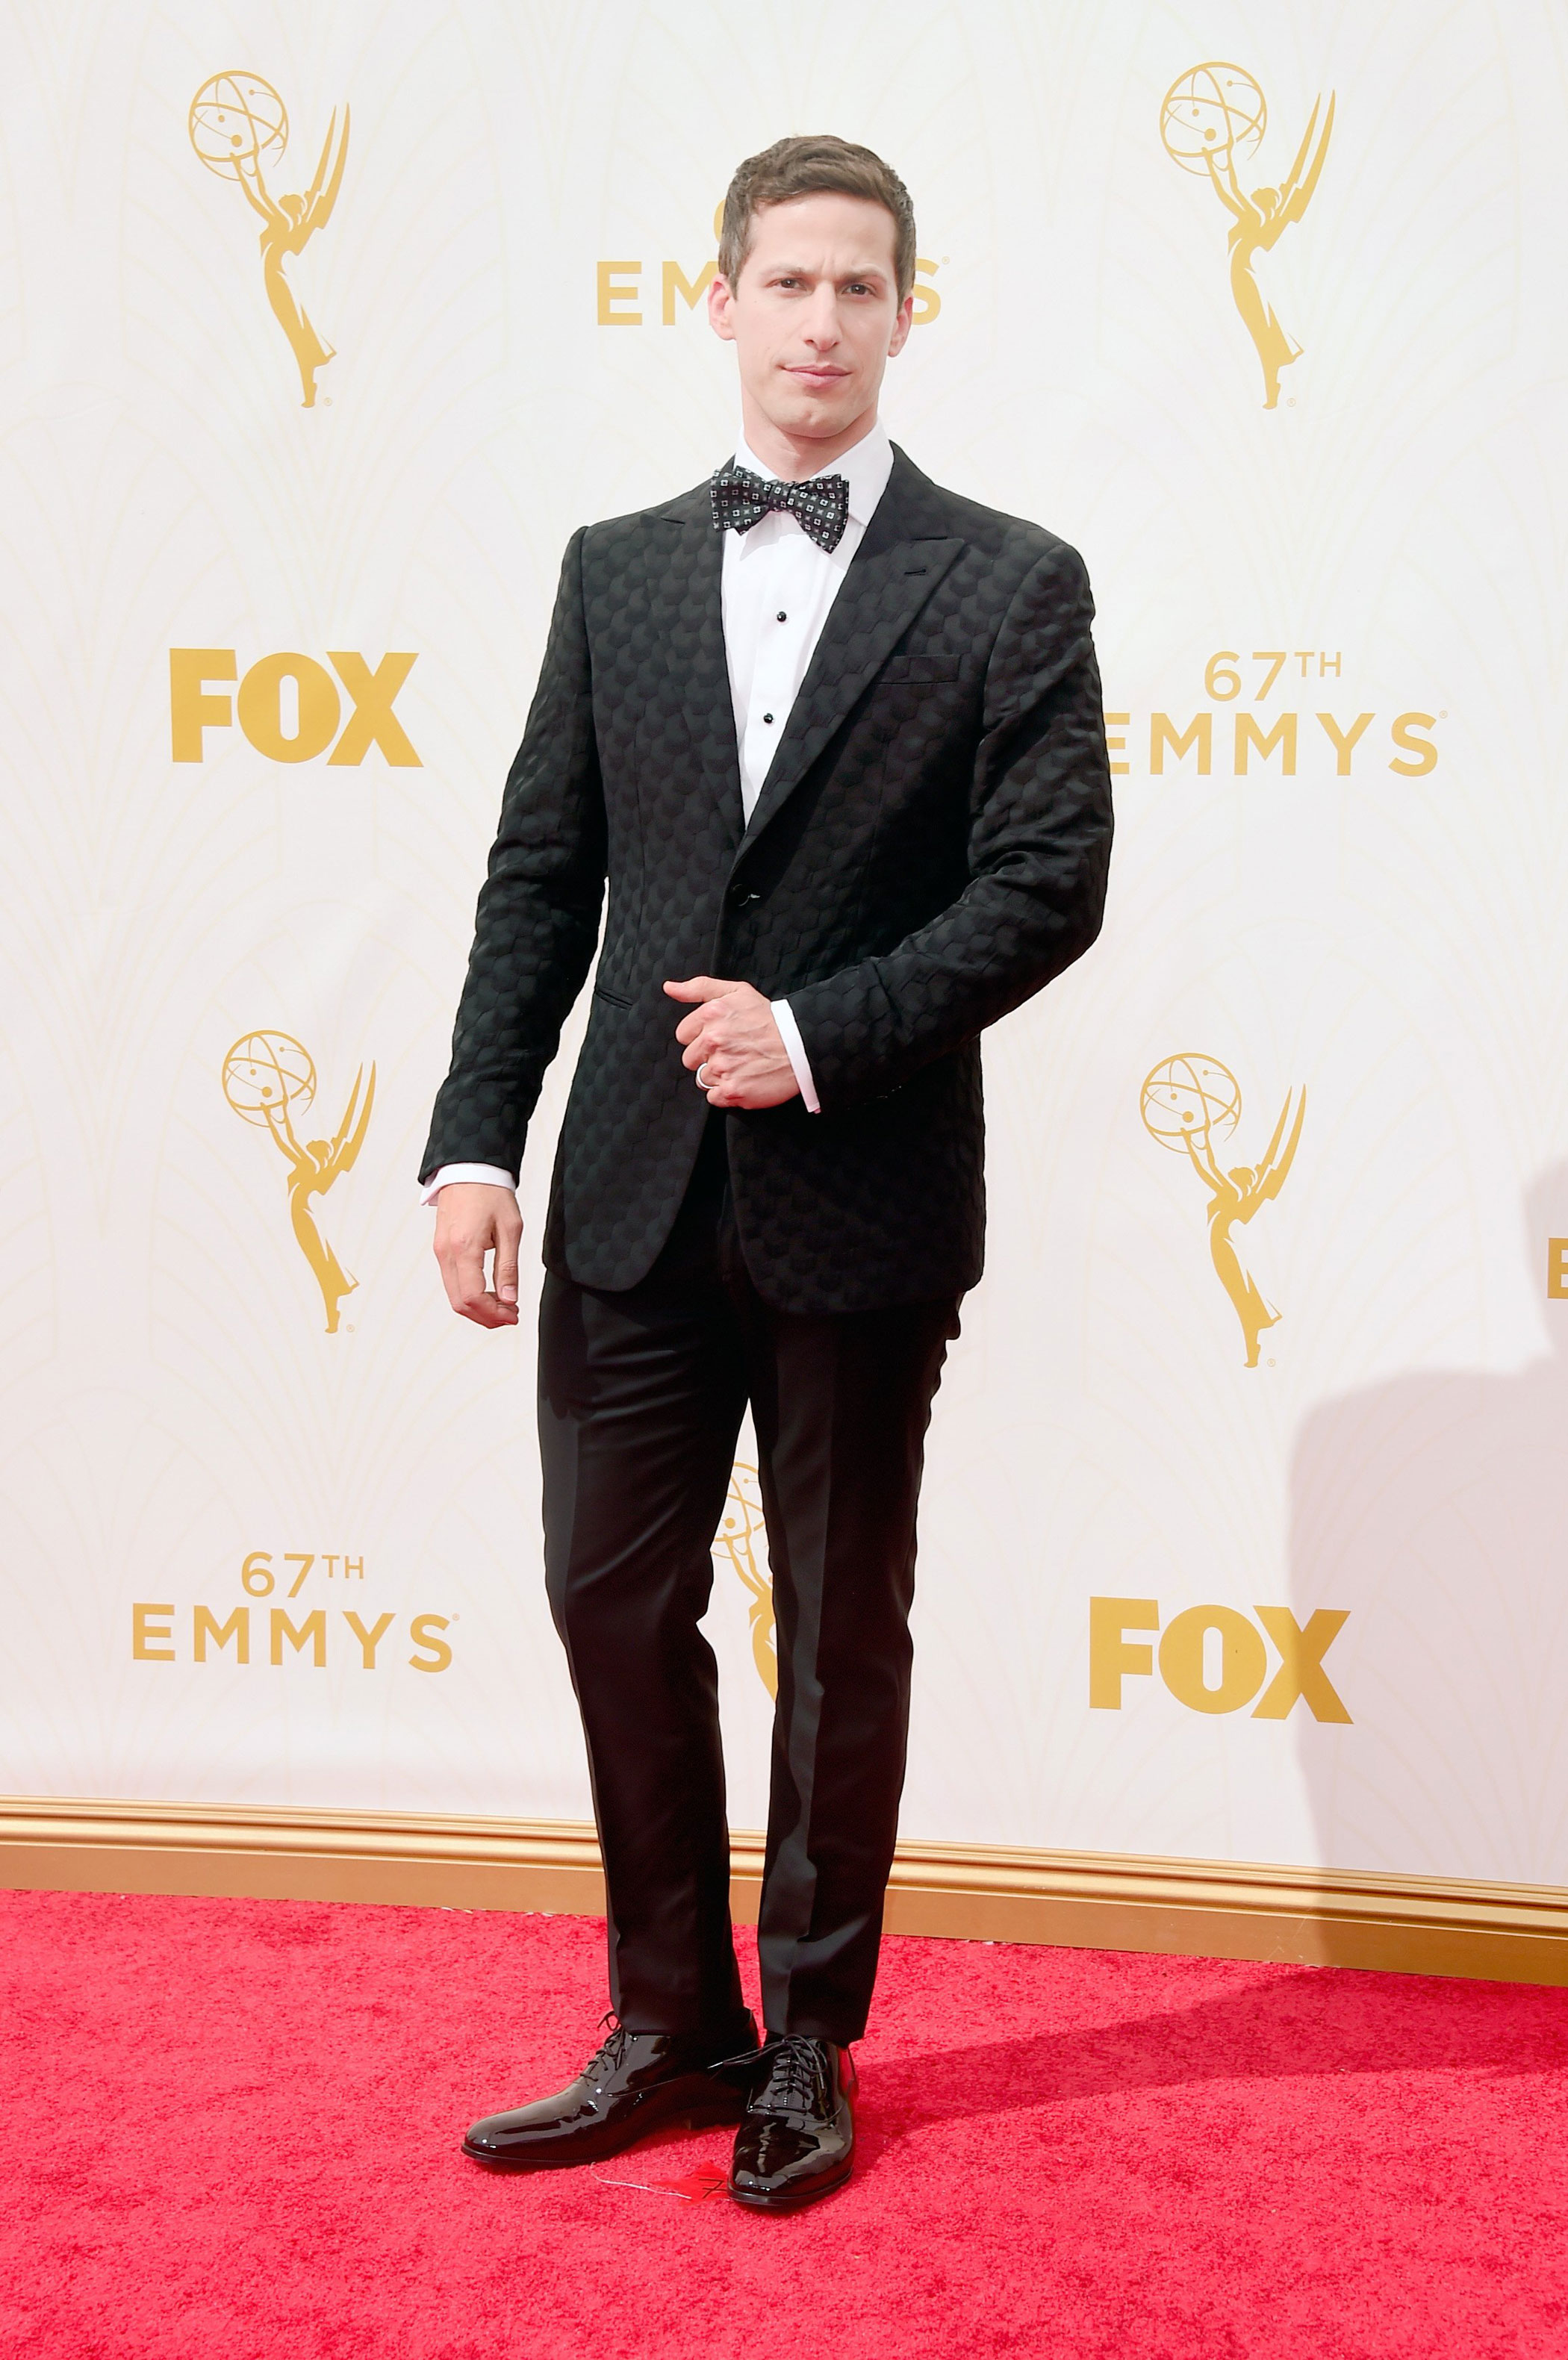 67th Emmys Awards - Andy Samberg - 2015